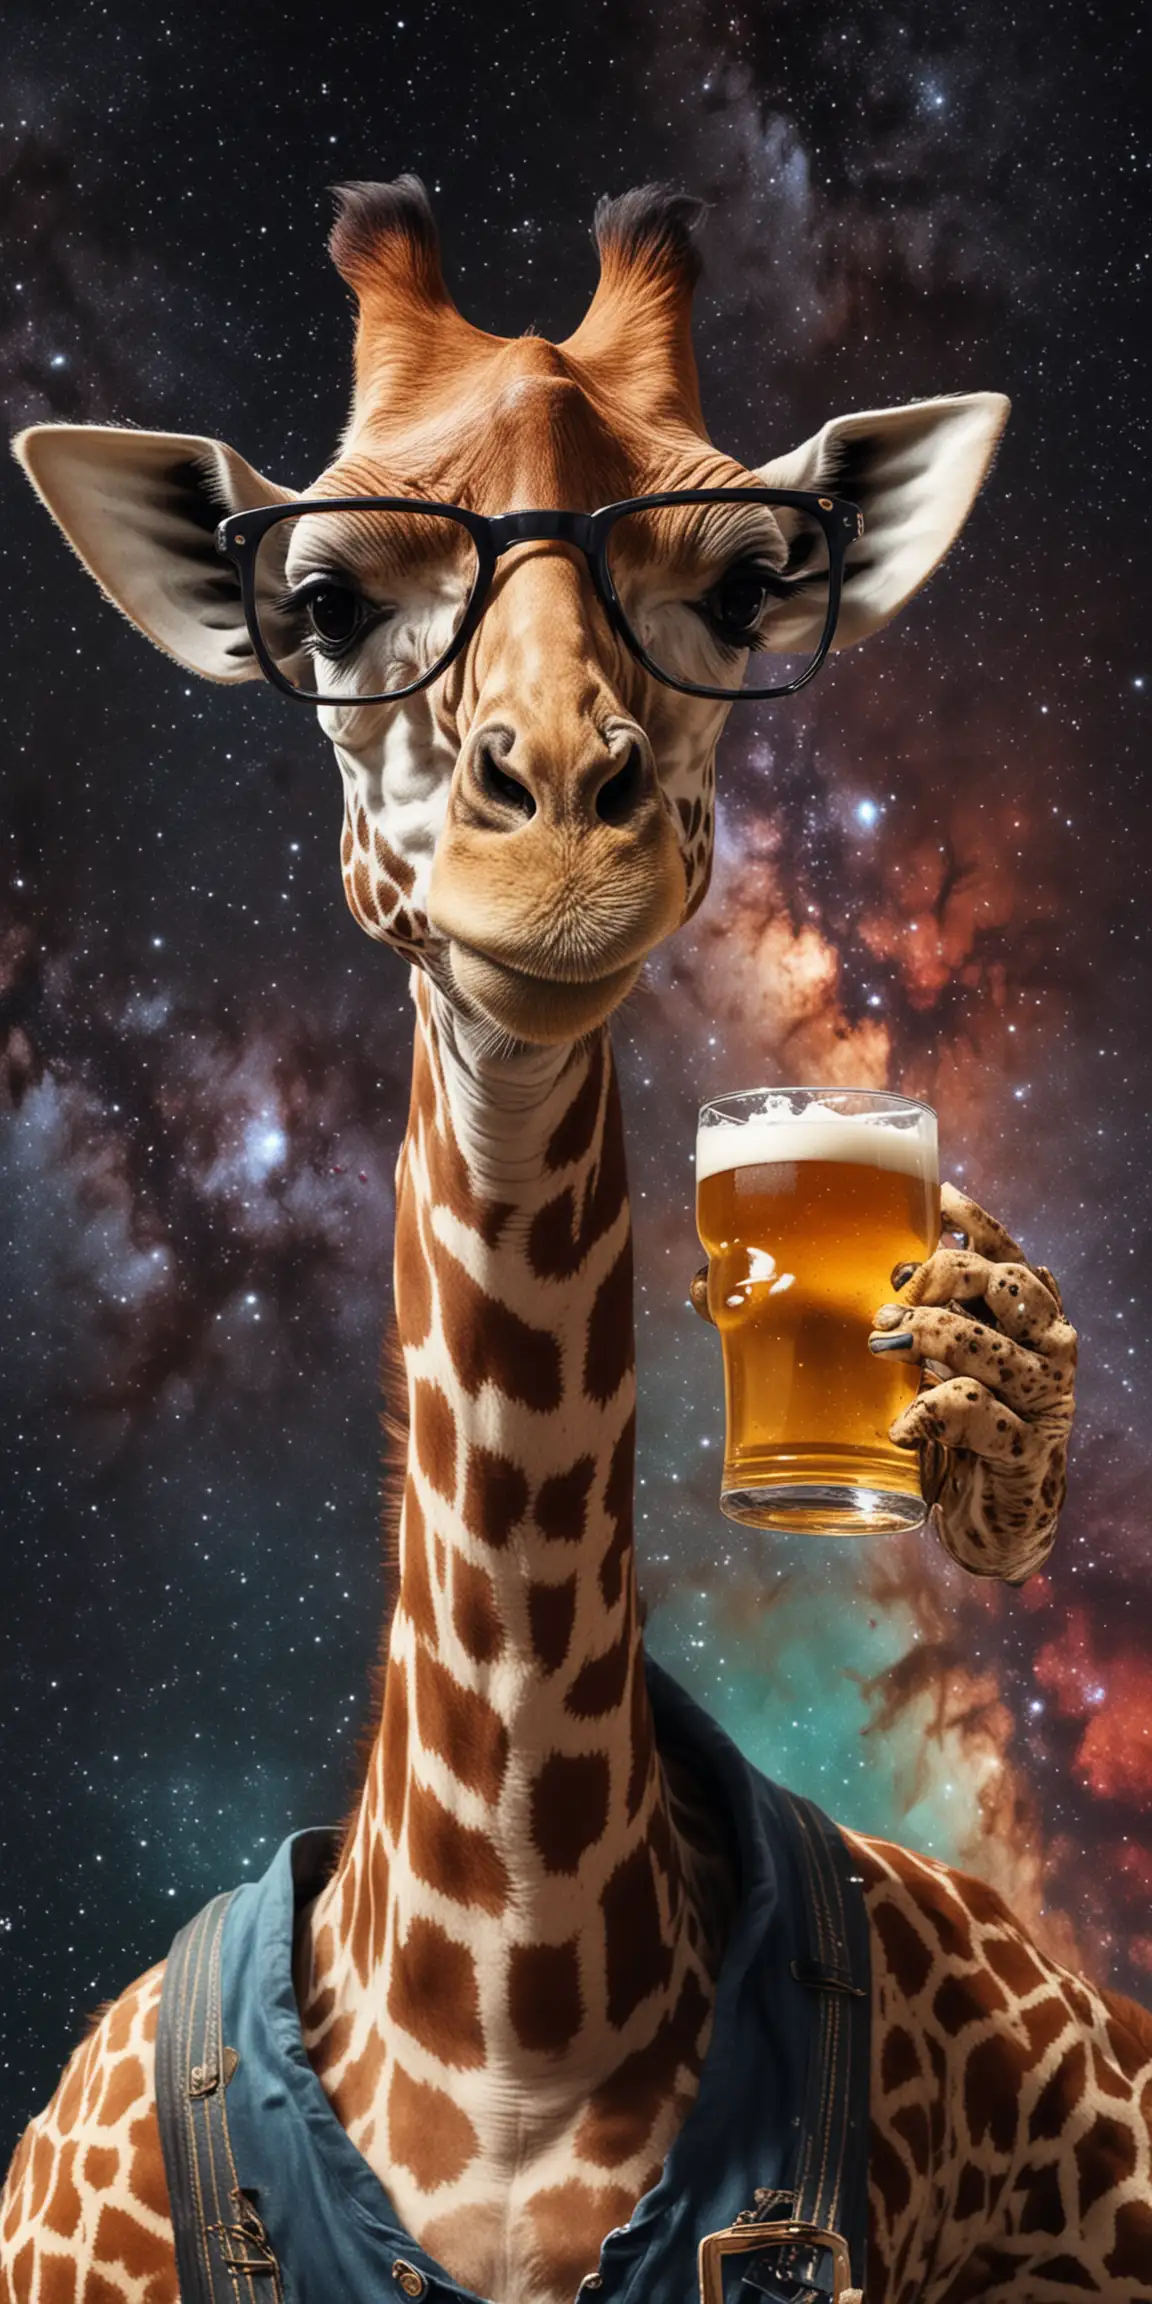 Giraffe with Glasses Enjoying Beer in Space